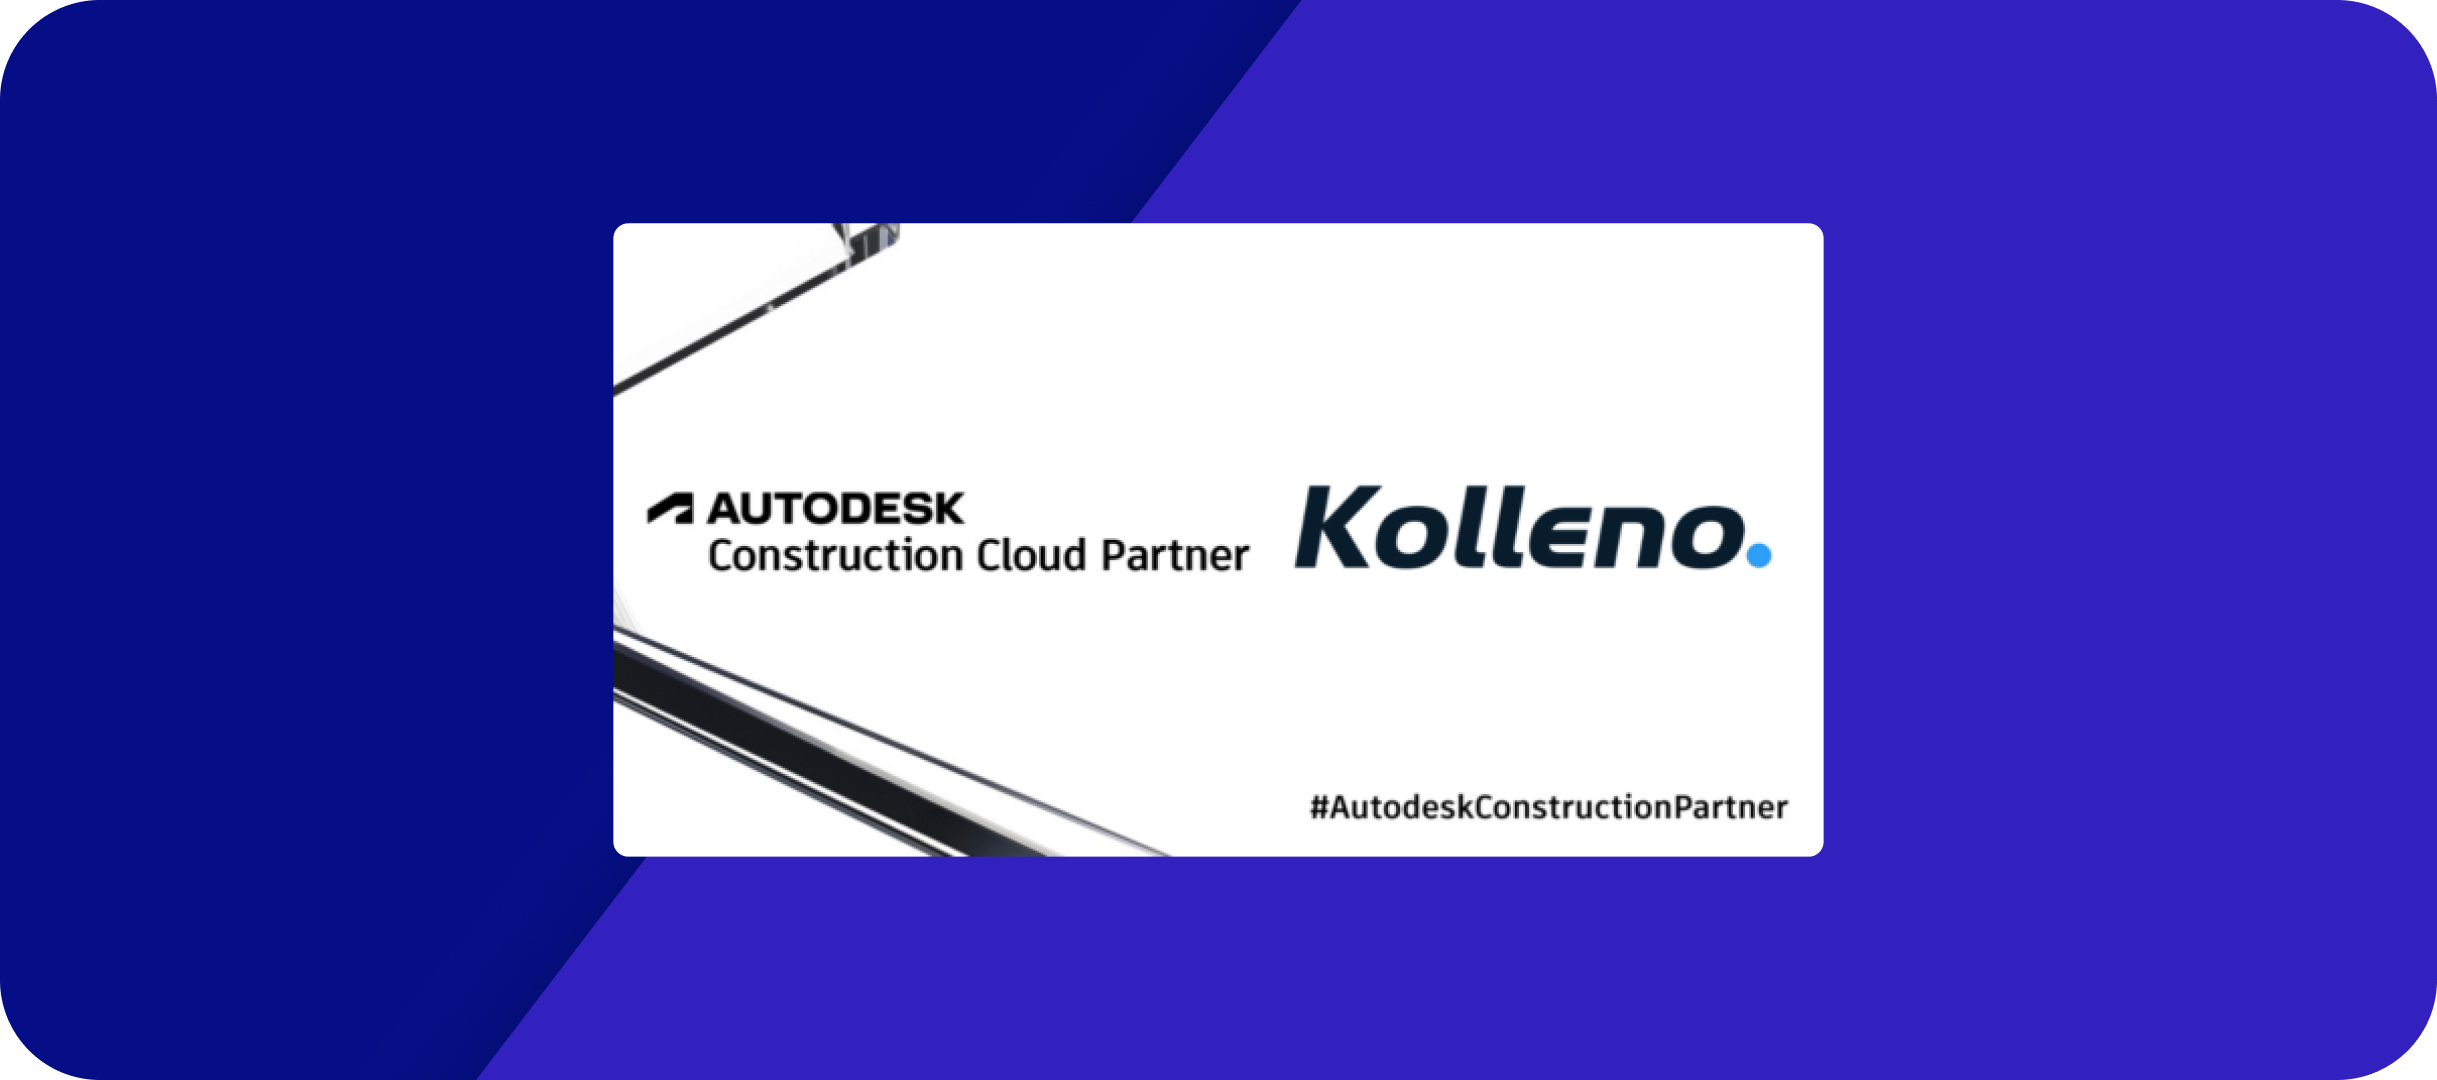 Kolleno’s Integration with Autodesk Construction Cloud